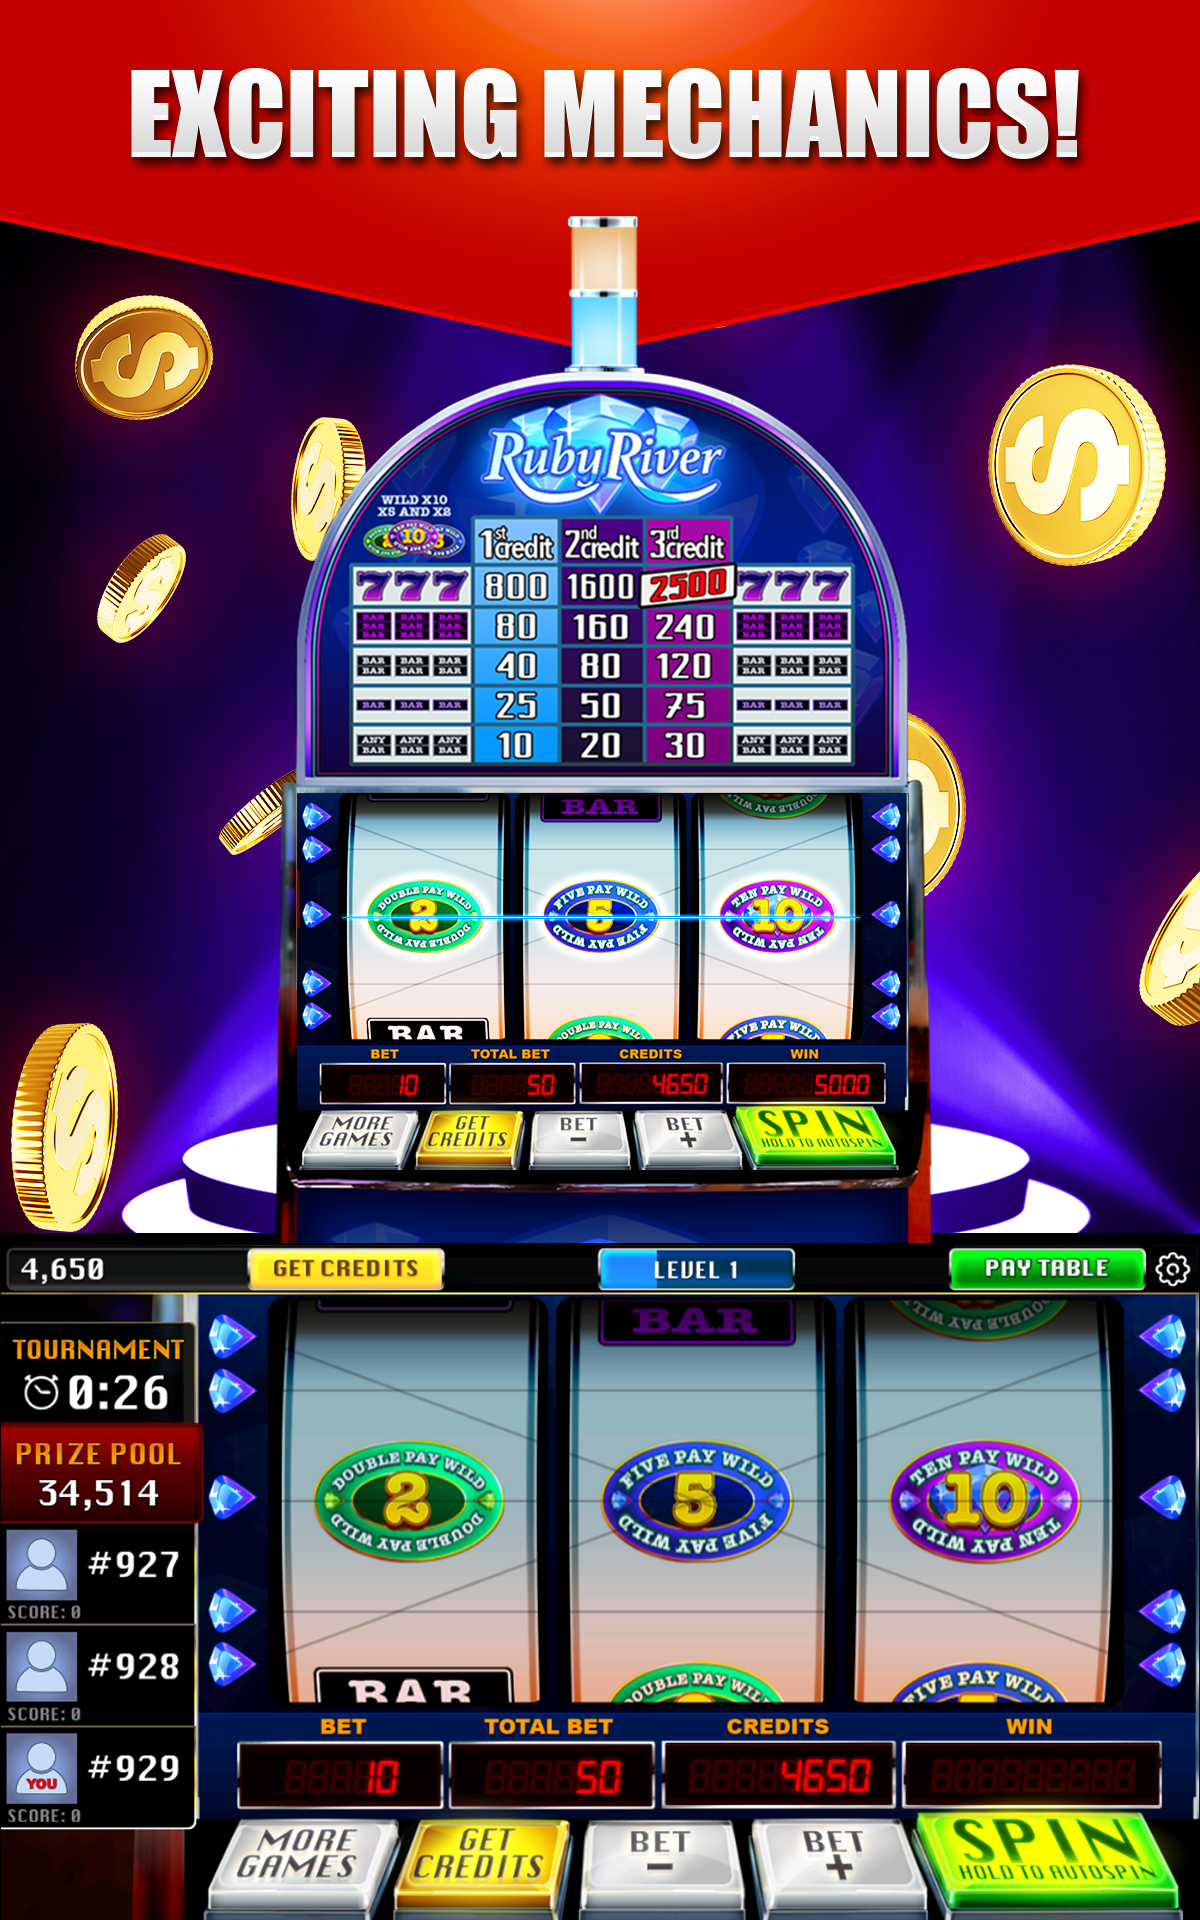 Online Slots Uk - Play Casino Slots